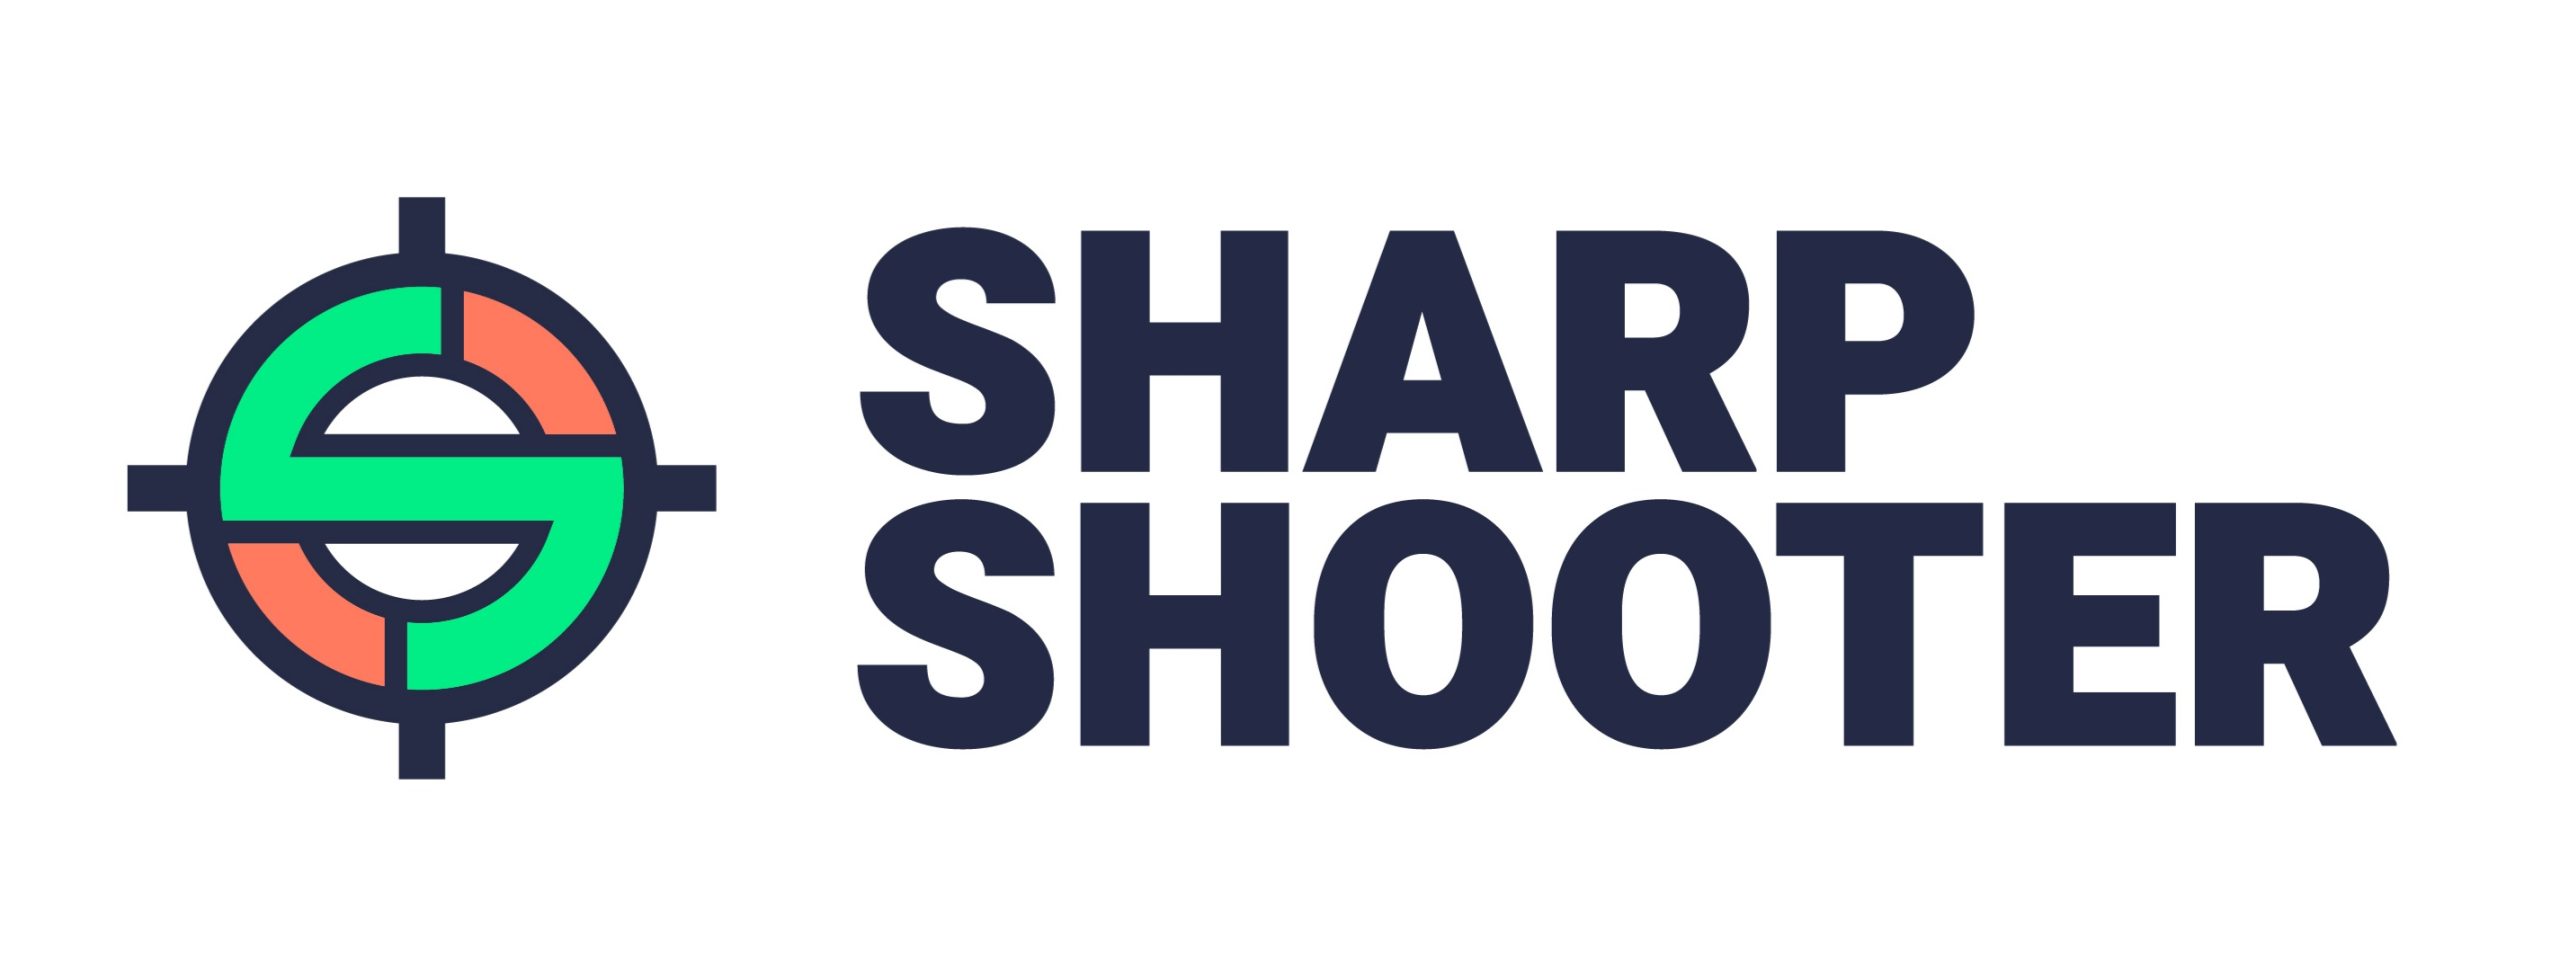 SHARP SHOOTER | شارپ شوتر